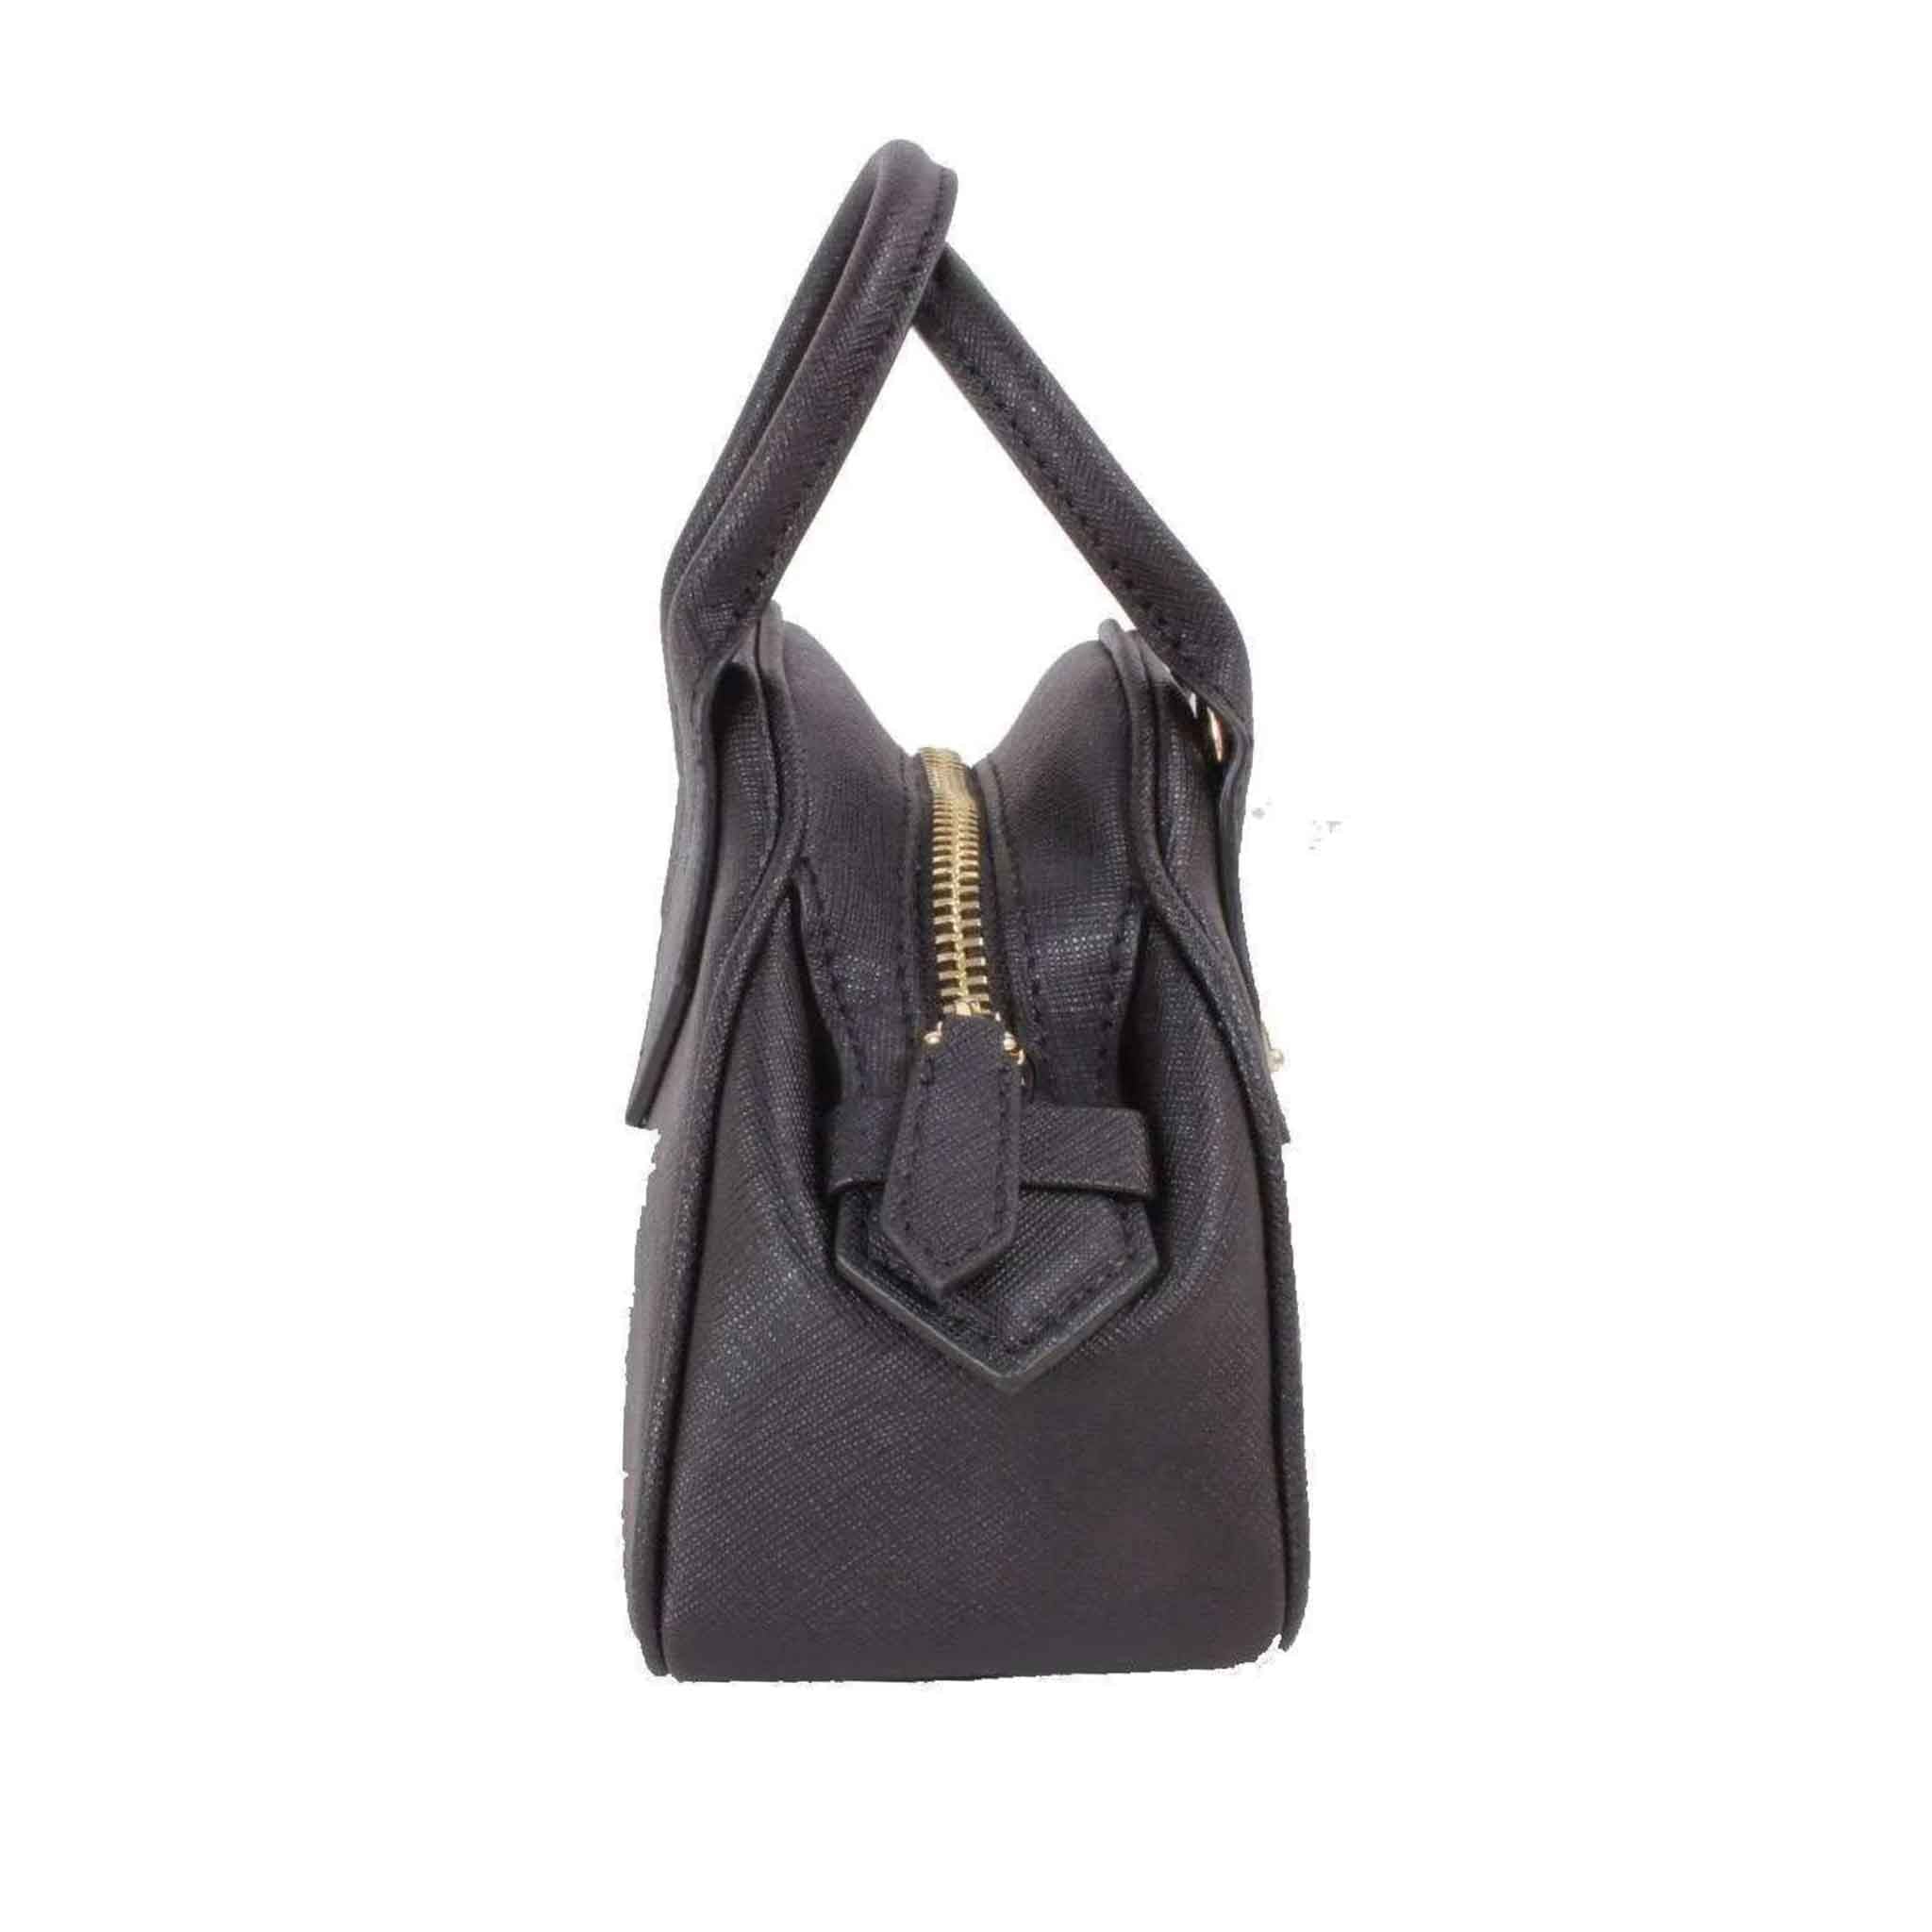 Vivienne Westwood Saffiano Mini Yasmine Bag in Black